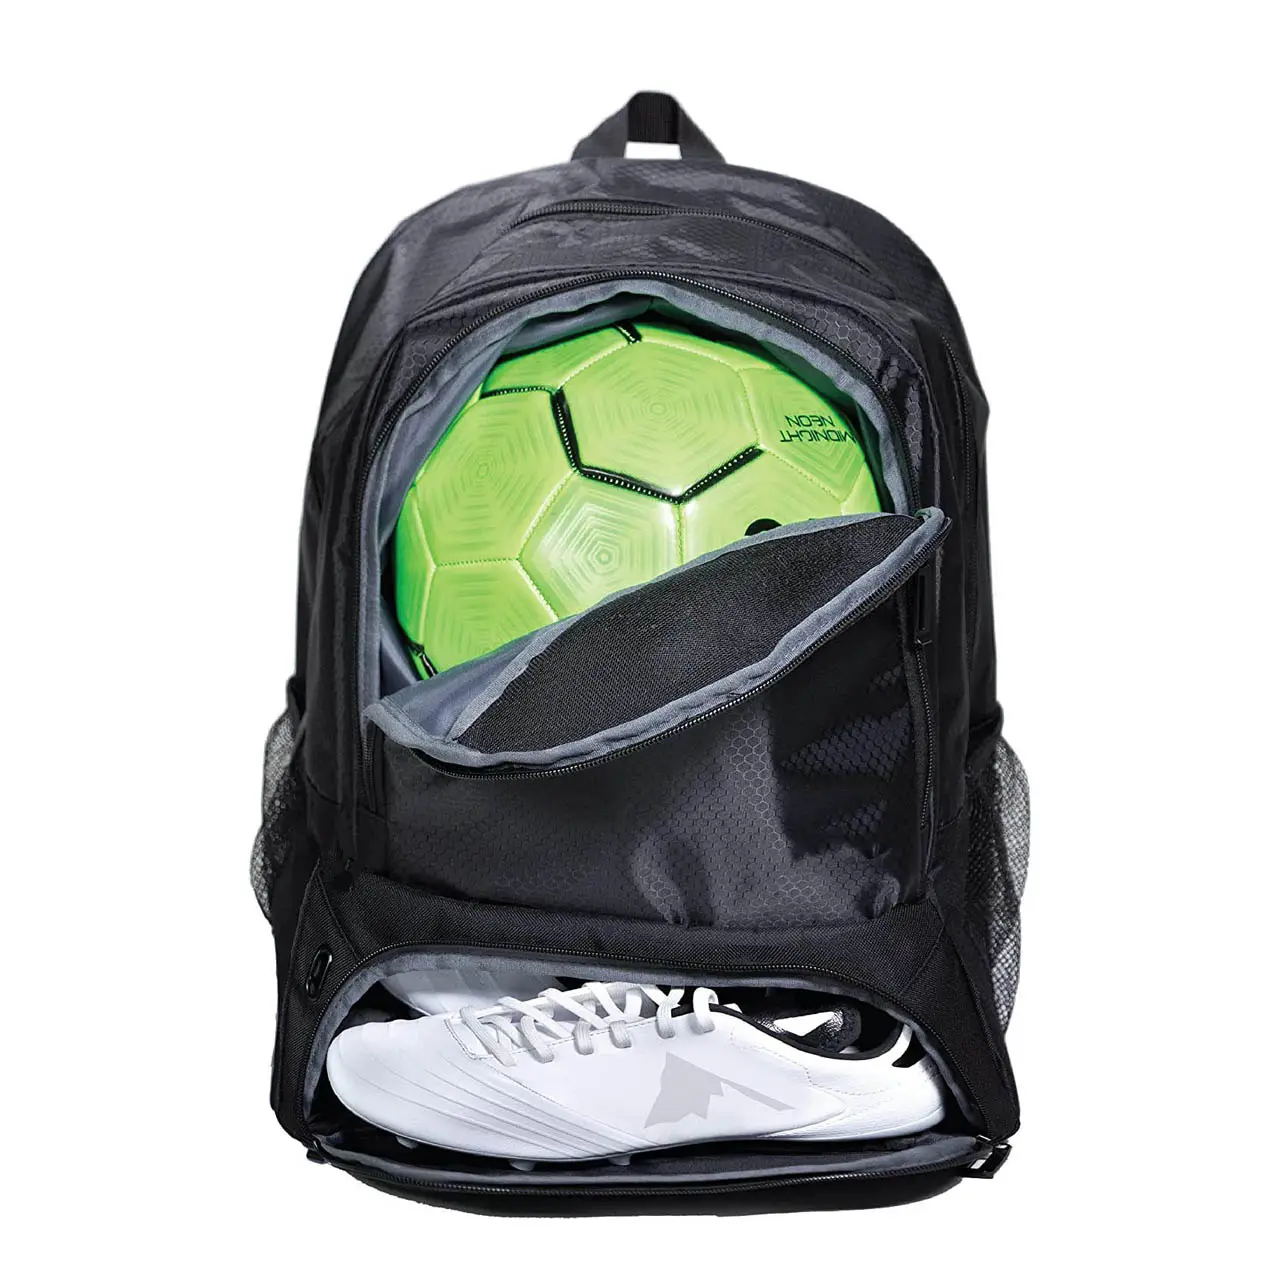 Mochila De Fútbol personalizada, bolsa deportiva de baloncesto con compartimento para bolas